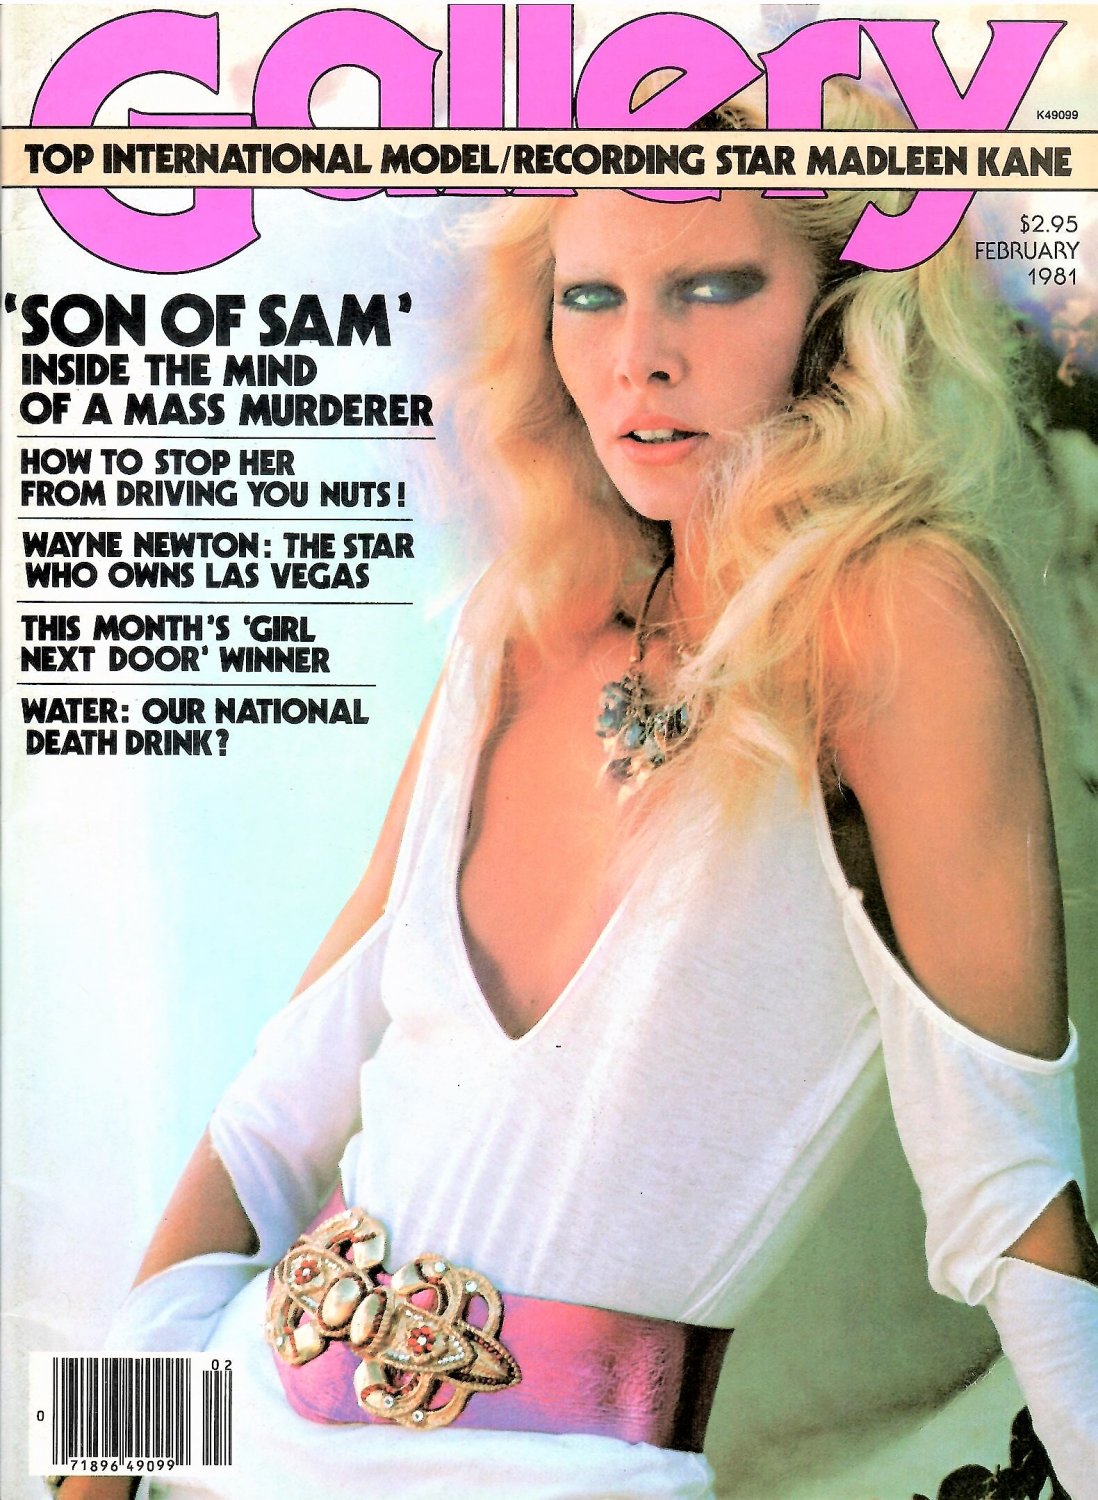 GALLERY MAGAZINE February 1981 MADLEEN KANE Wayne Newton Interview SON OF SAM